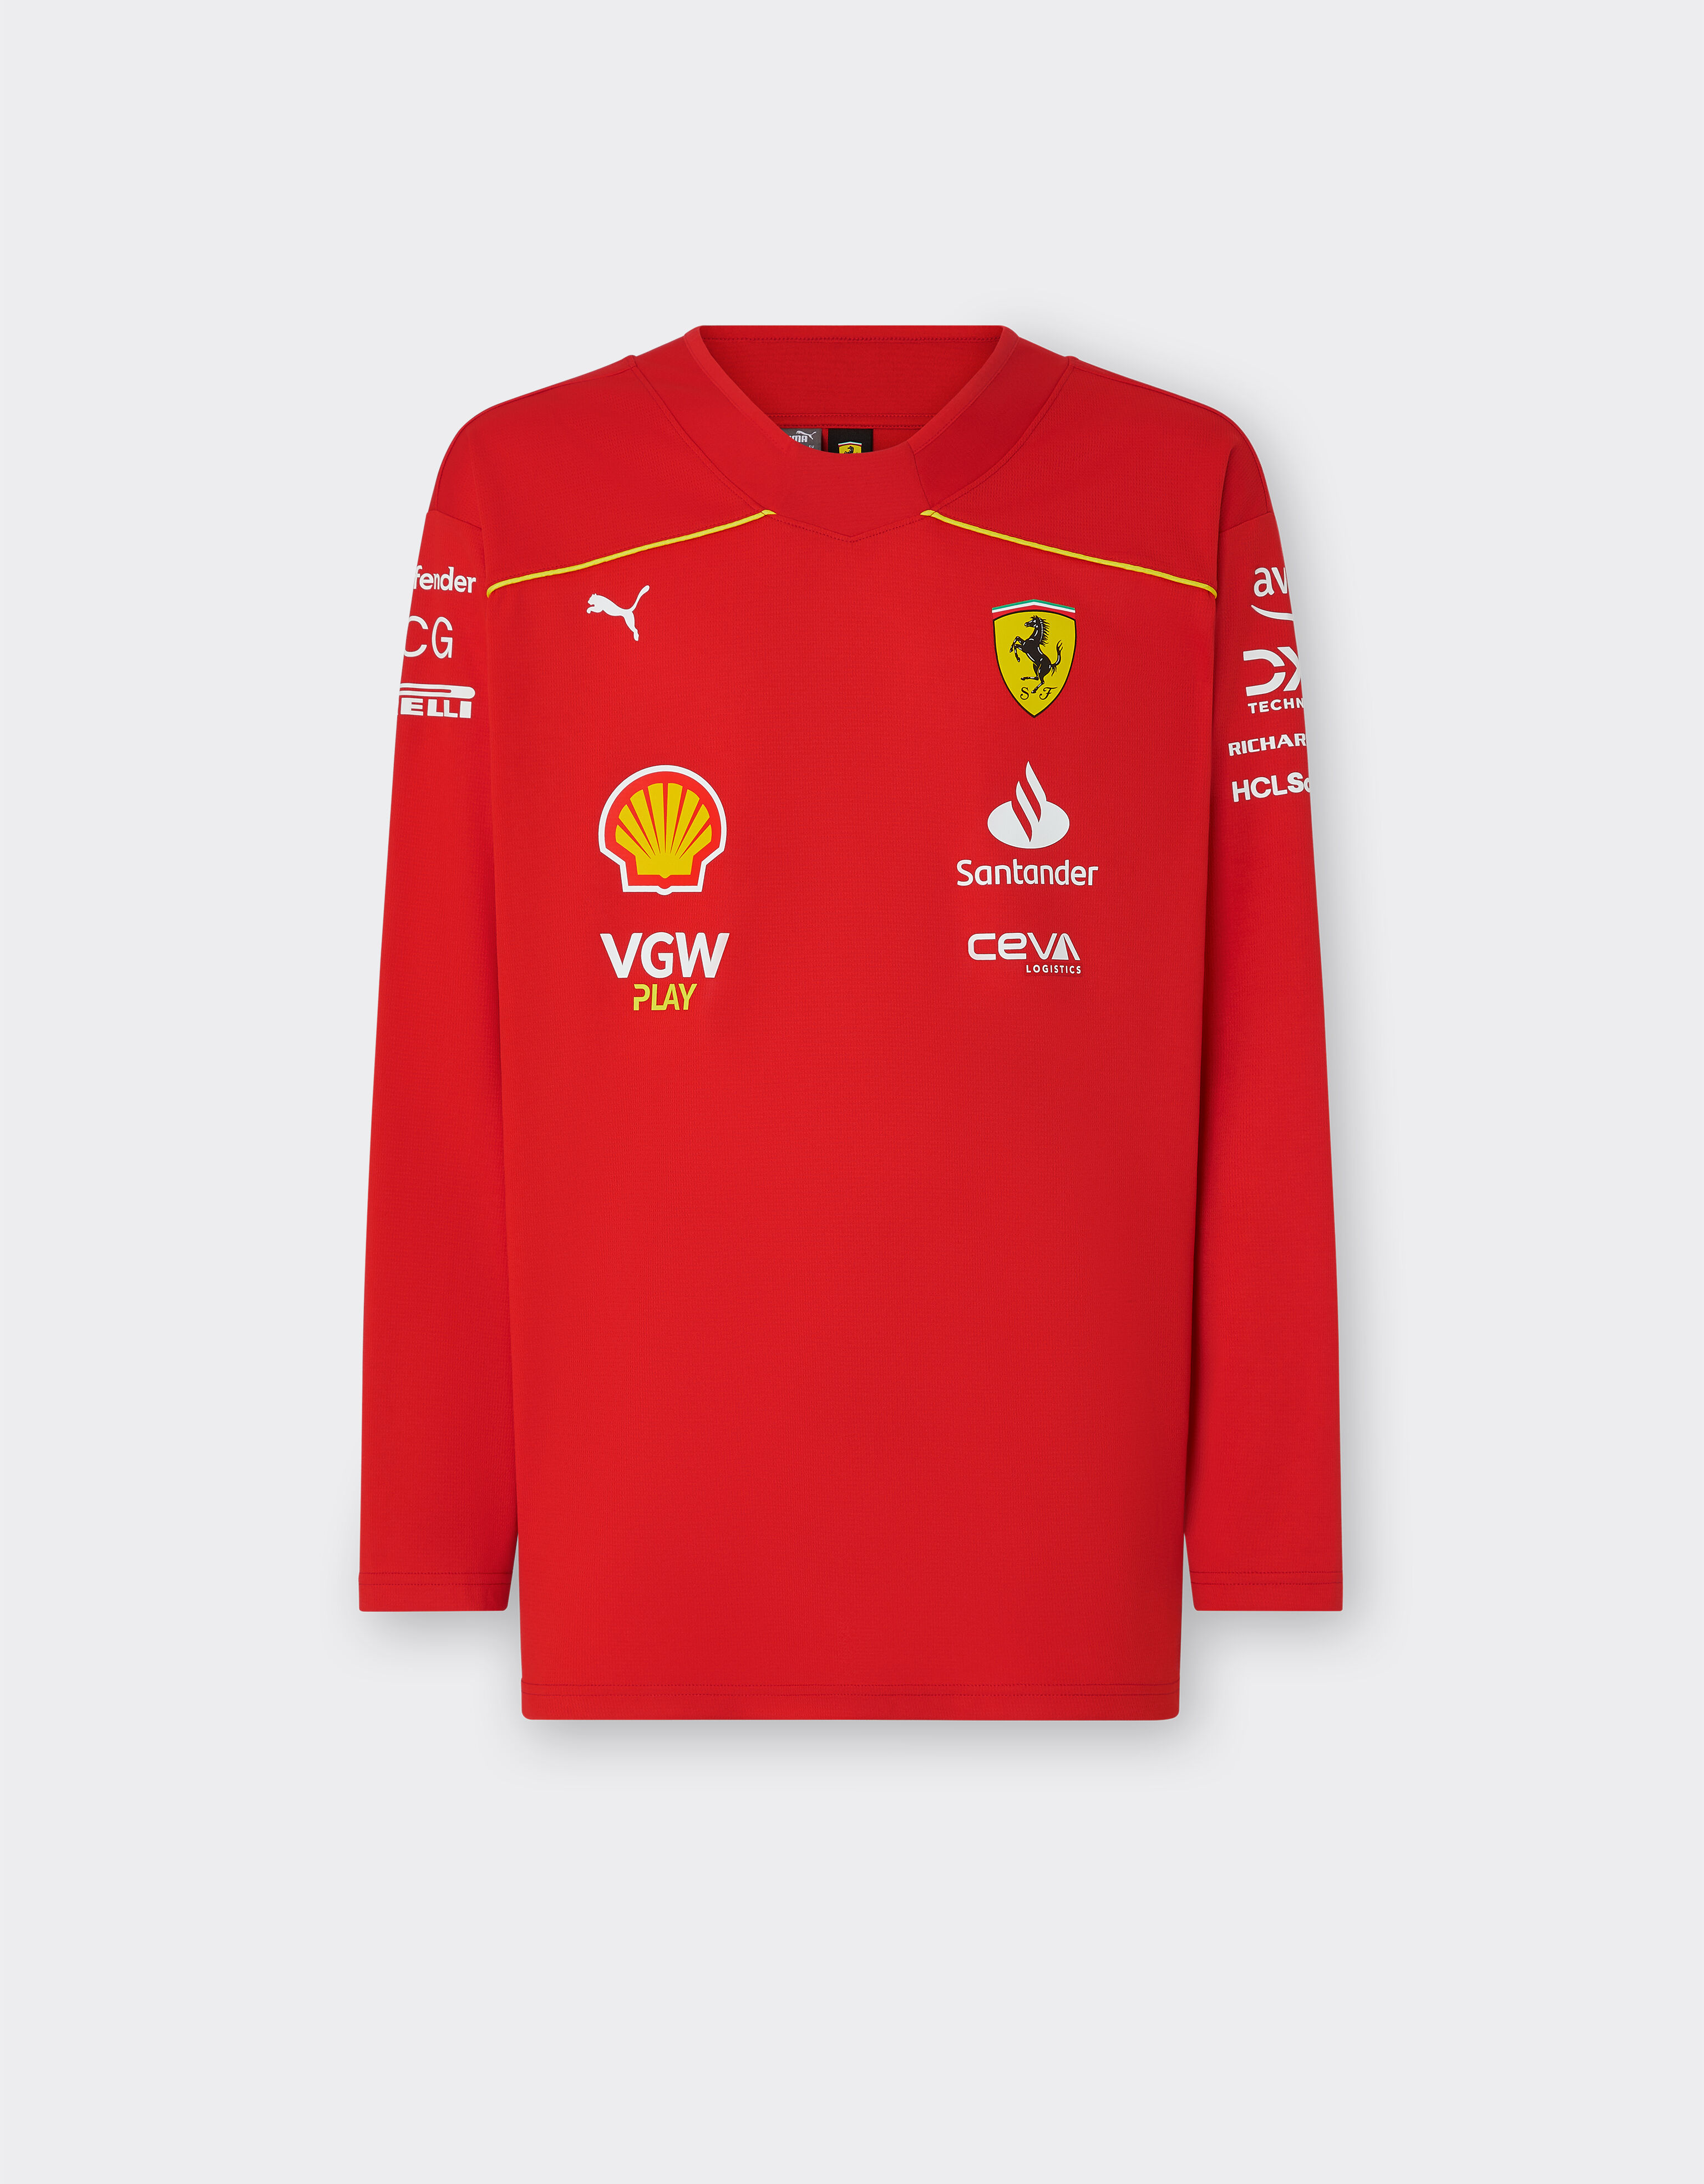 Ferrari Camiseta de hockey Puma de Sainz para la Scuderia Ferrari - Edición especial Canadá Rosso Corsa F1146f